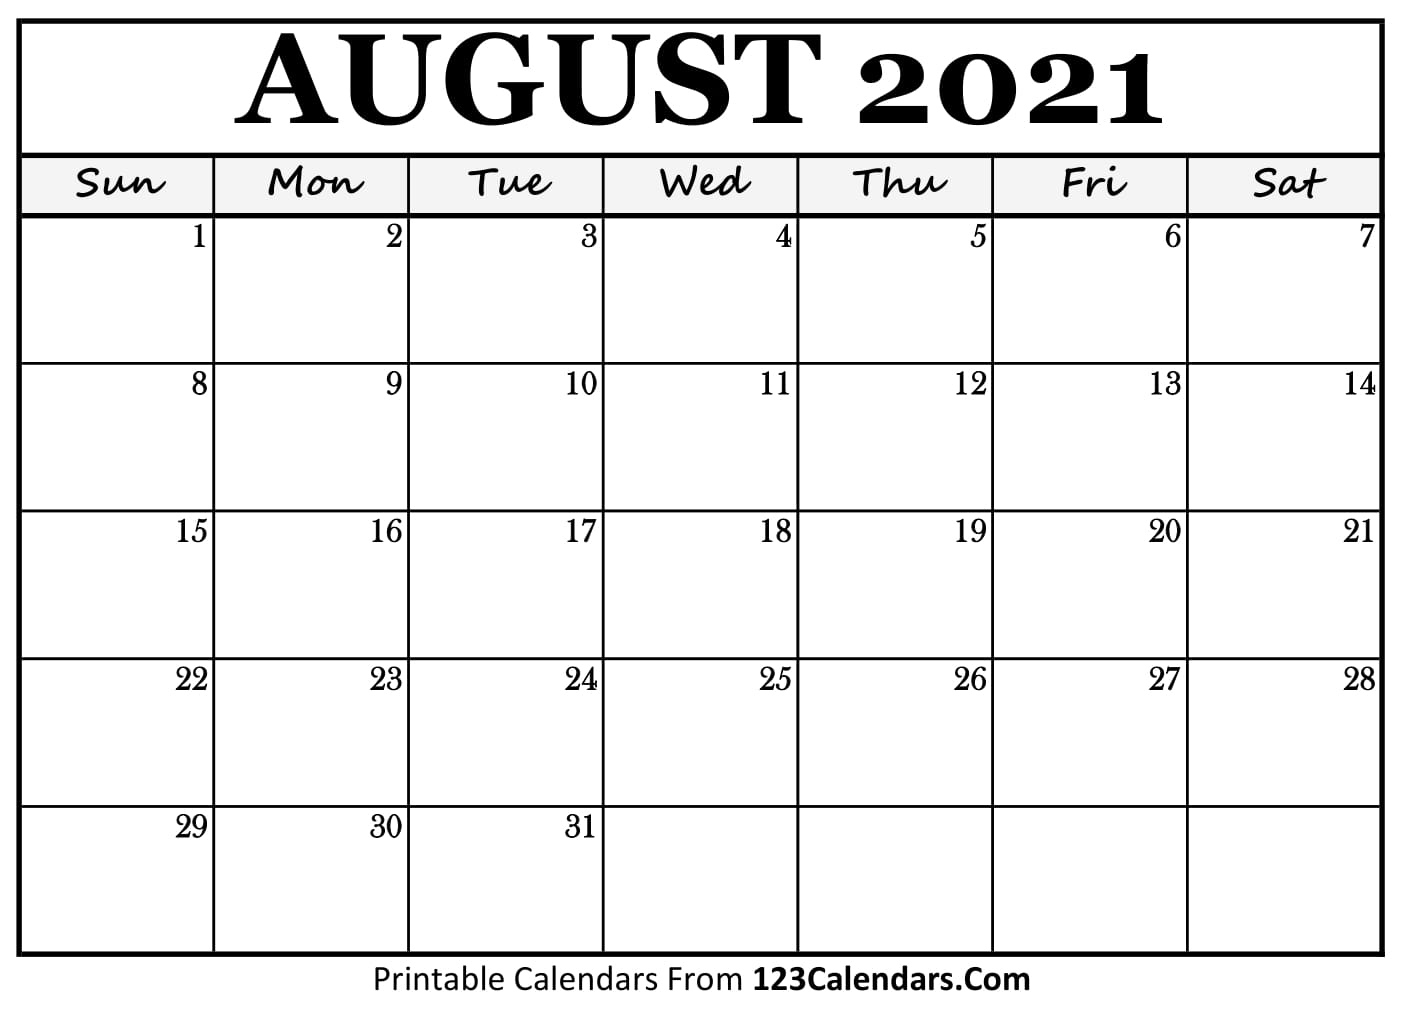 Printable August 2021 Calendar Templates | 123Calendars August 2021 Blank Calendar Printable